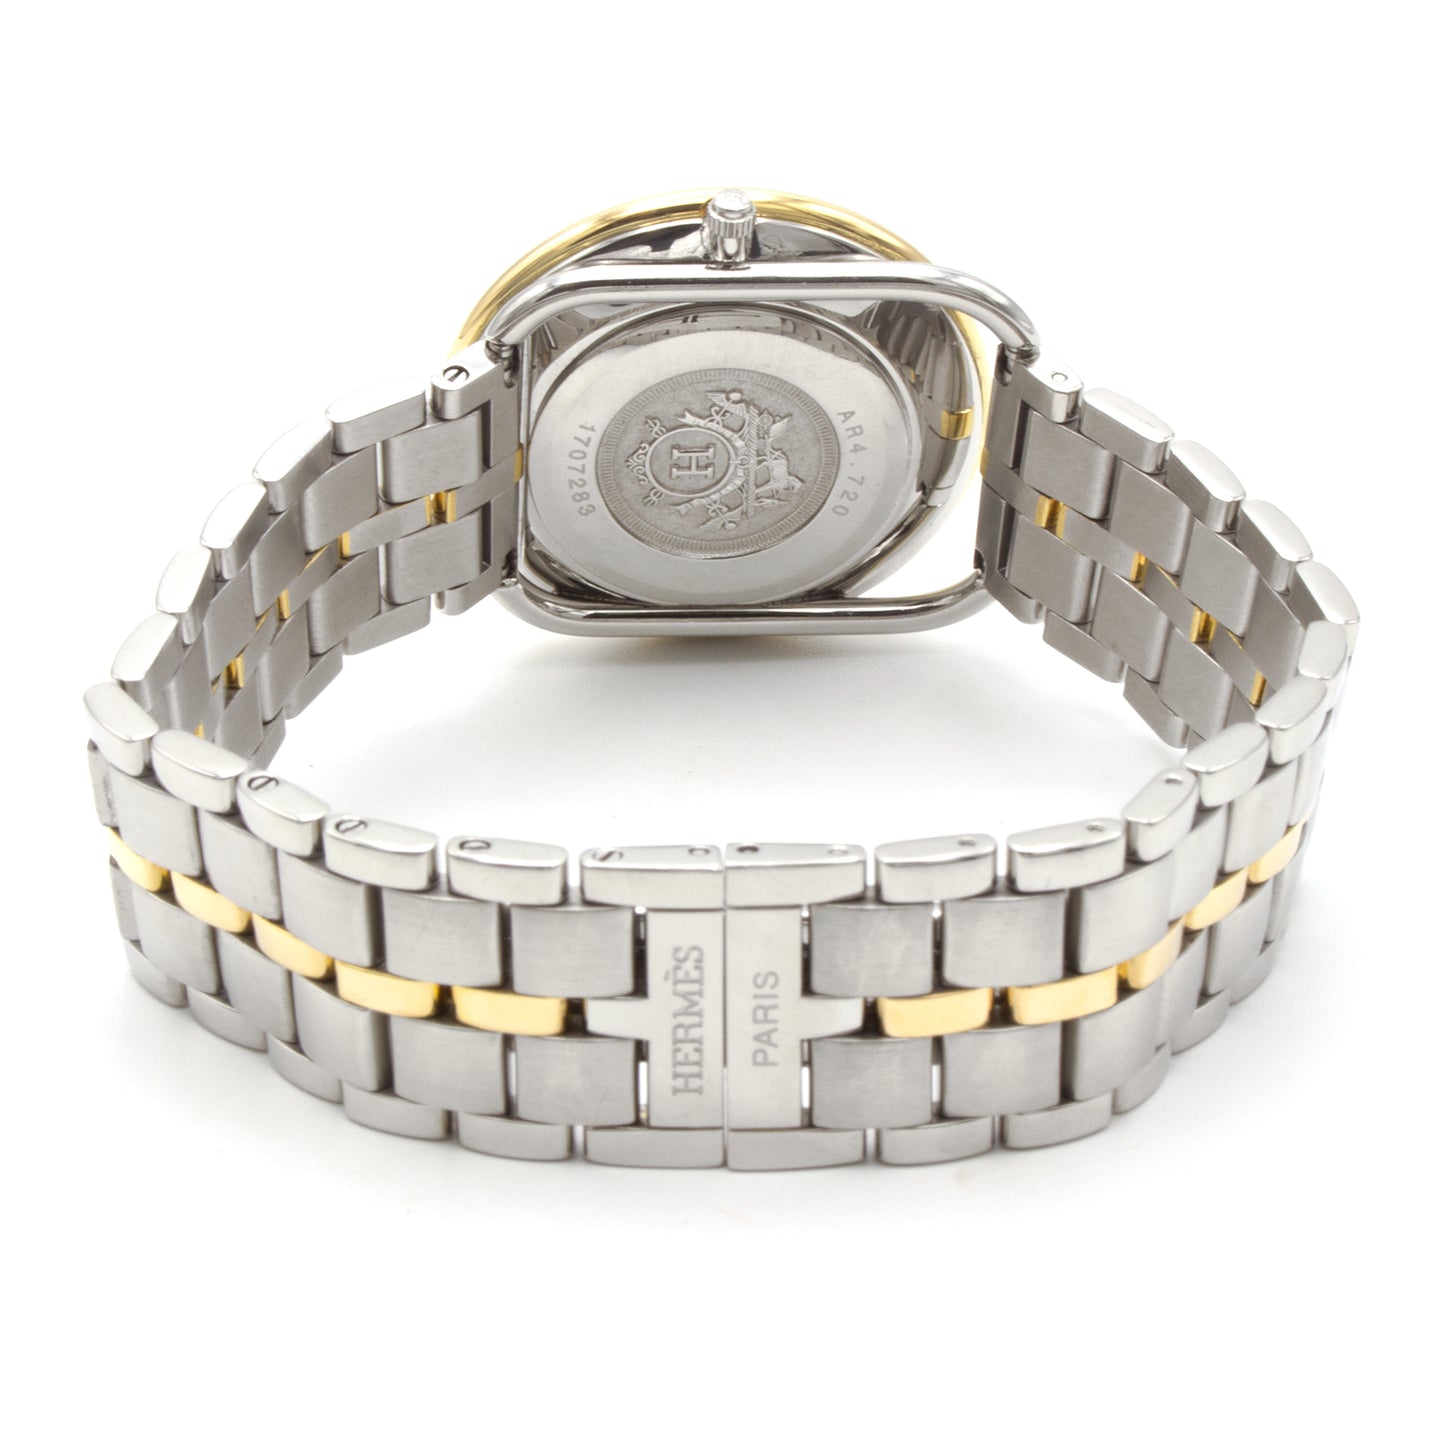 Hermès Arceau AR4.720 watch